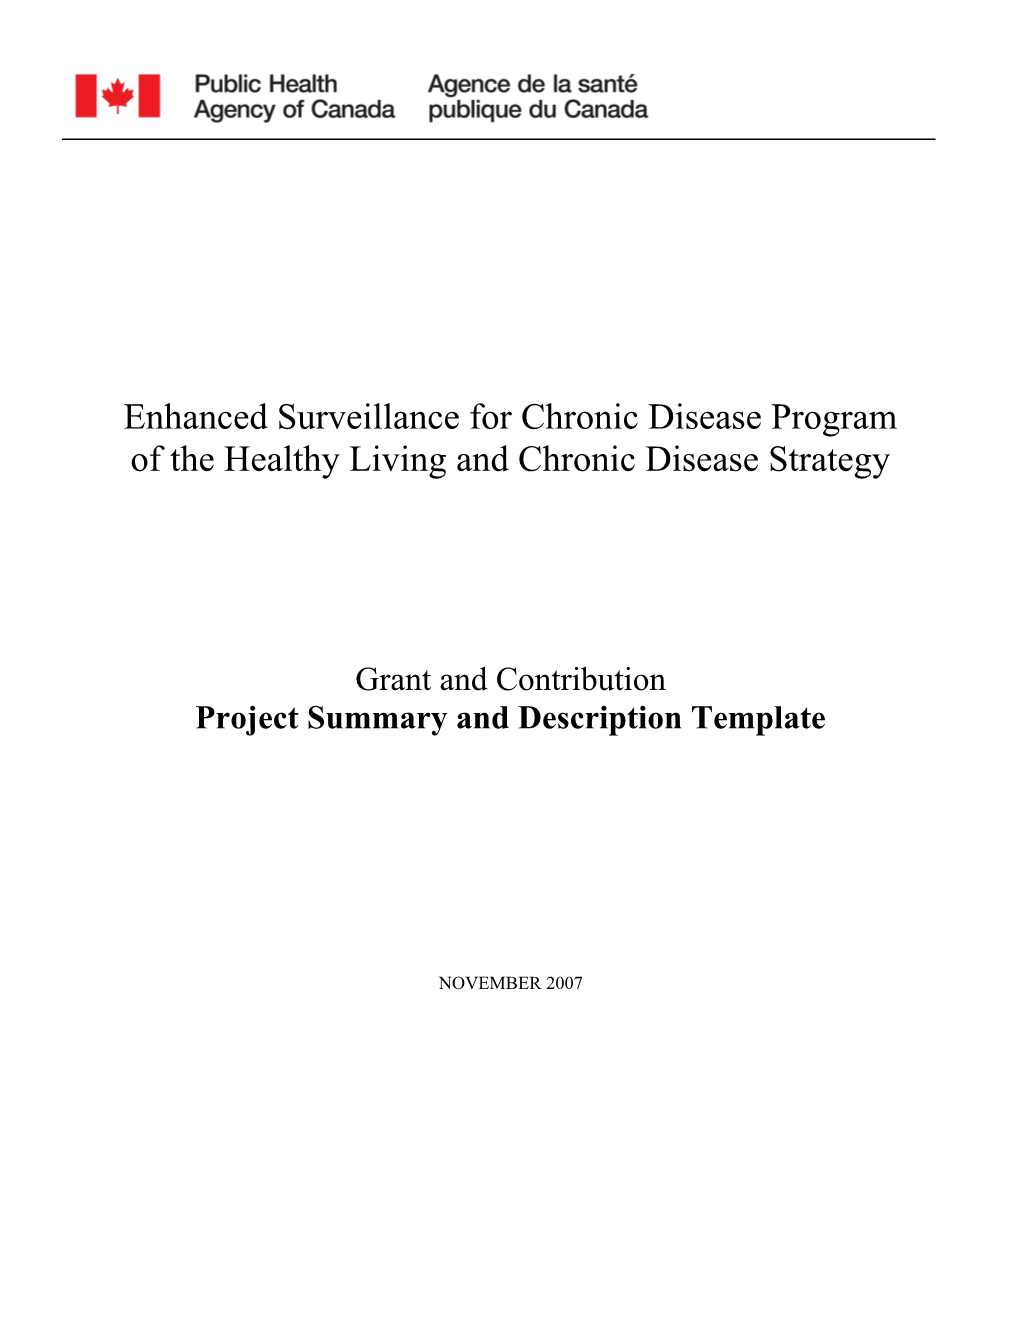 Enhanced Surveillance for Chronic Disease Program of the Healthy Living and Chronic Disease